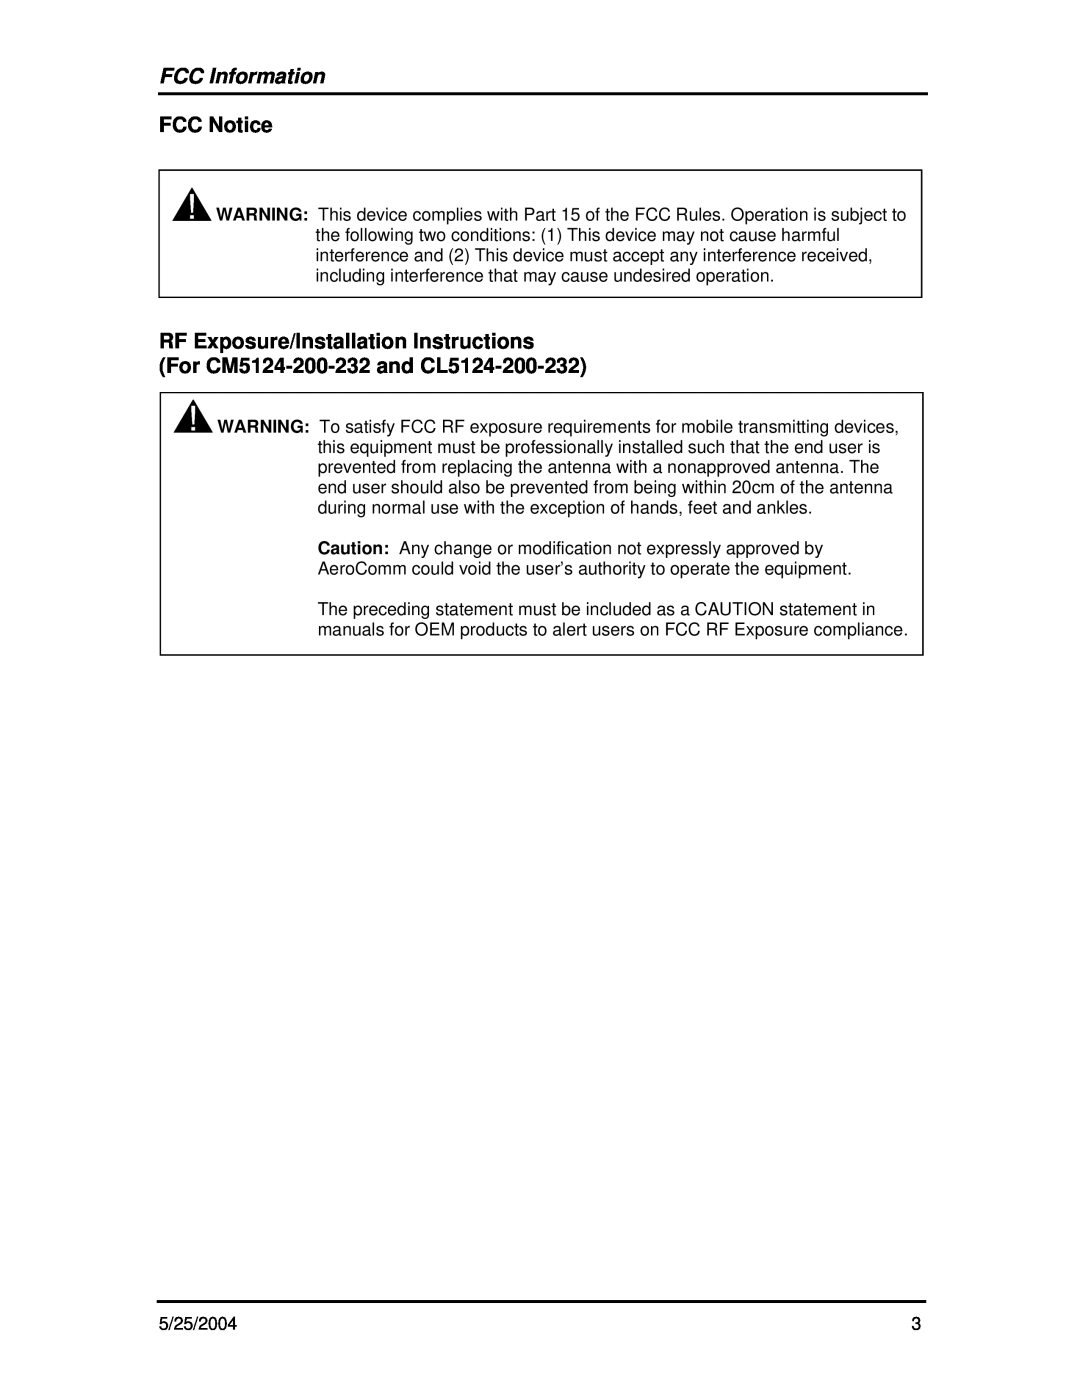 AeroComm ConnexModem Version 2.0 user manual FCC Information, FCC Notice, RF Exposure/Installation Instructions 